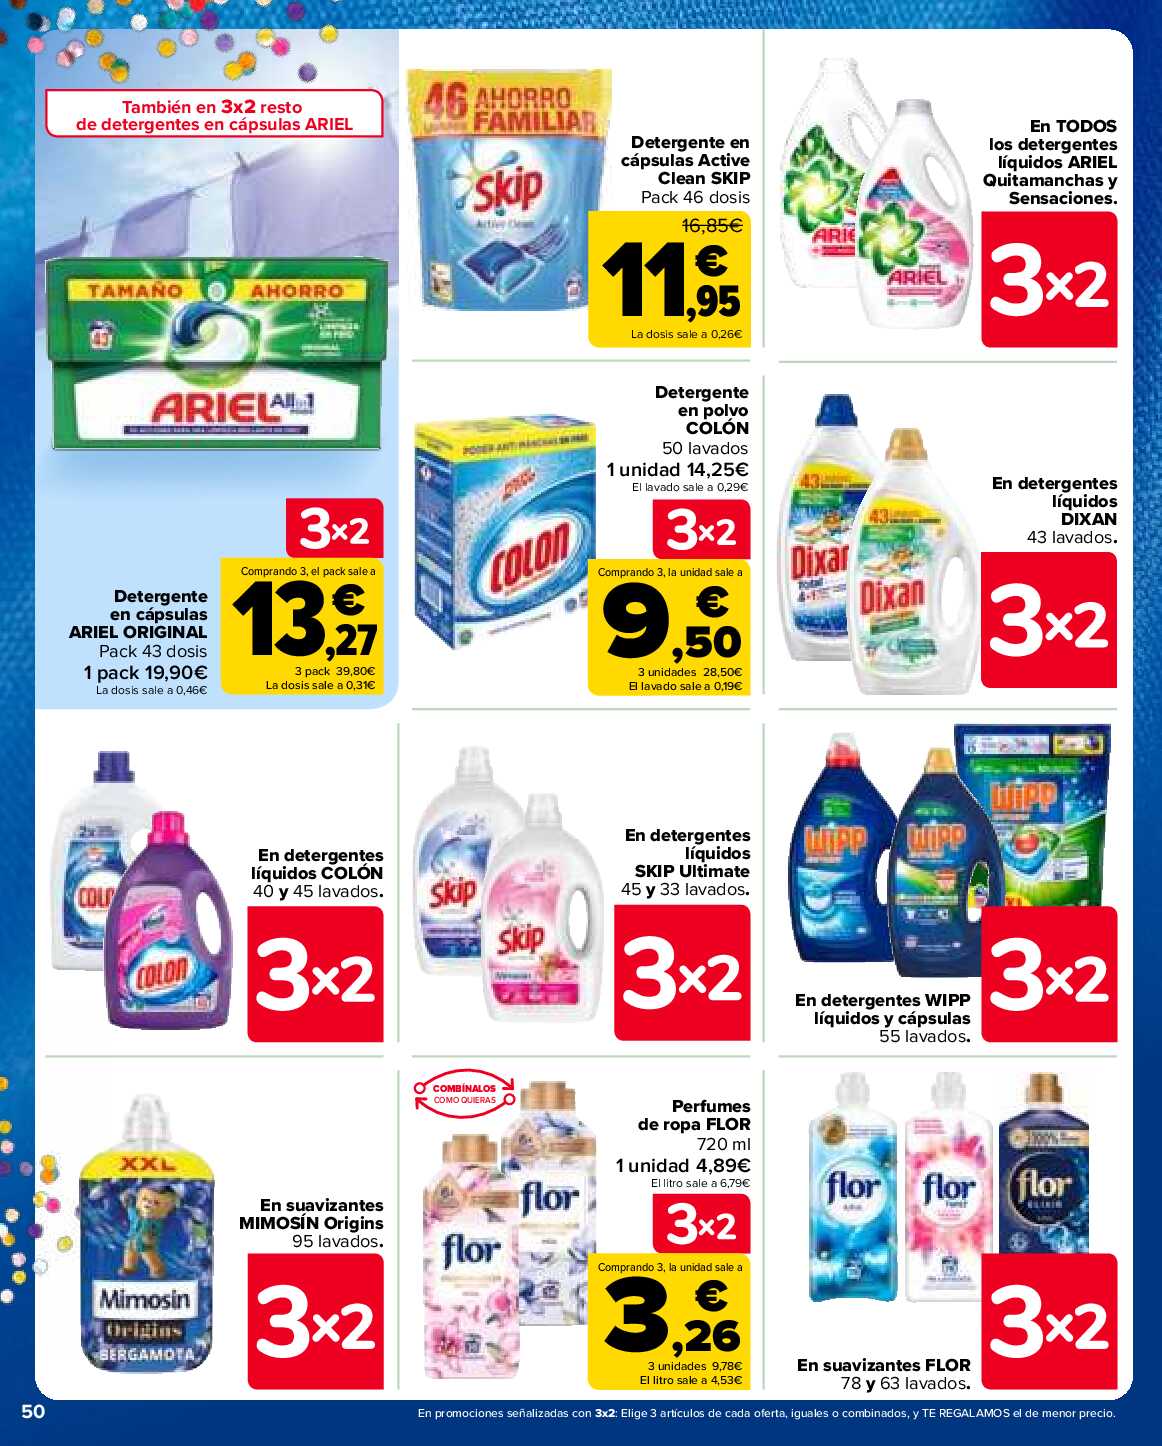 3x2 Carrefour Carrefour. Página 50